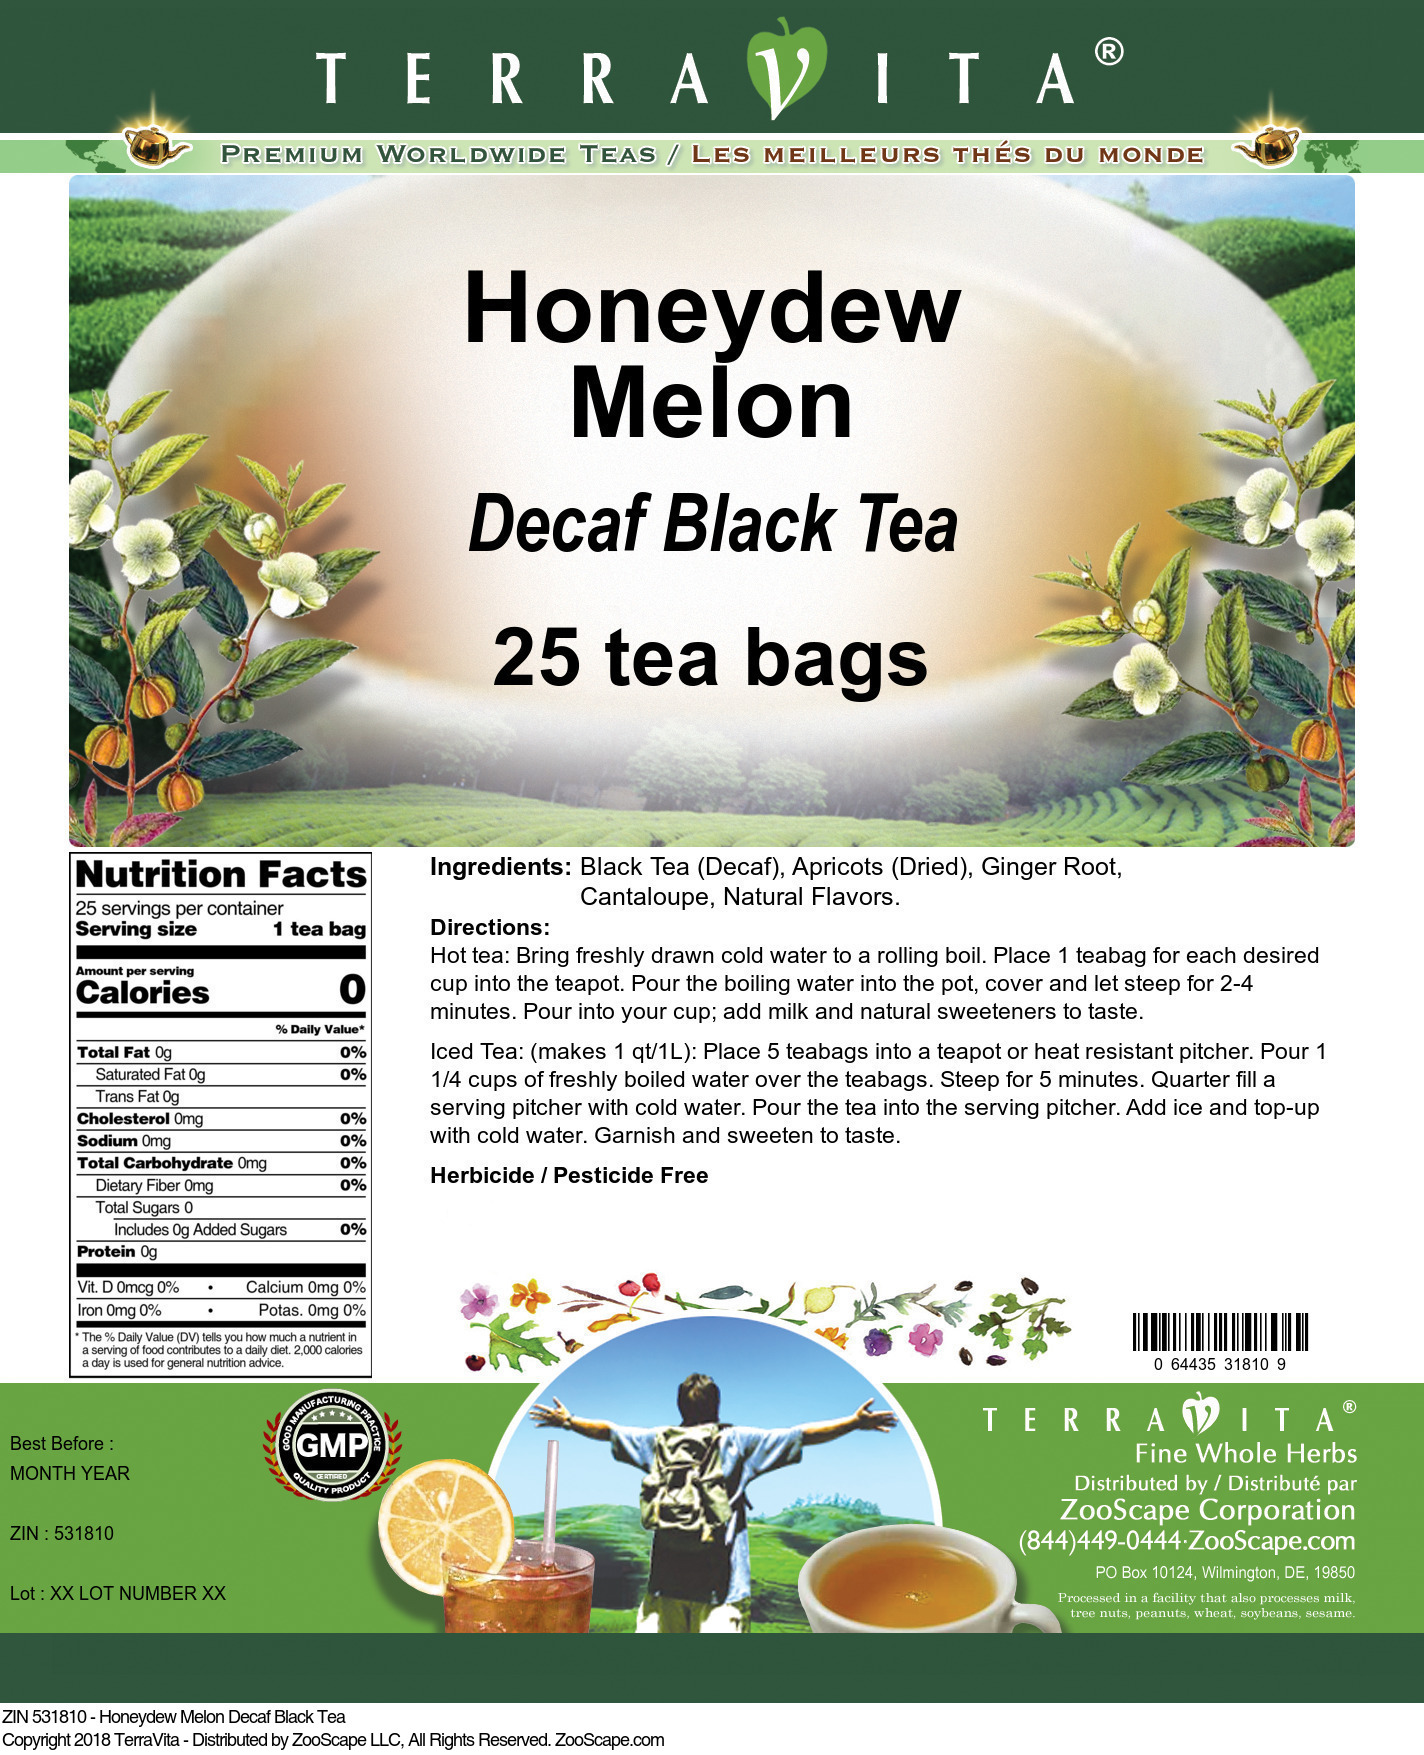 Honeydew Melon Decaf Black Tea - Label